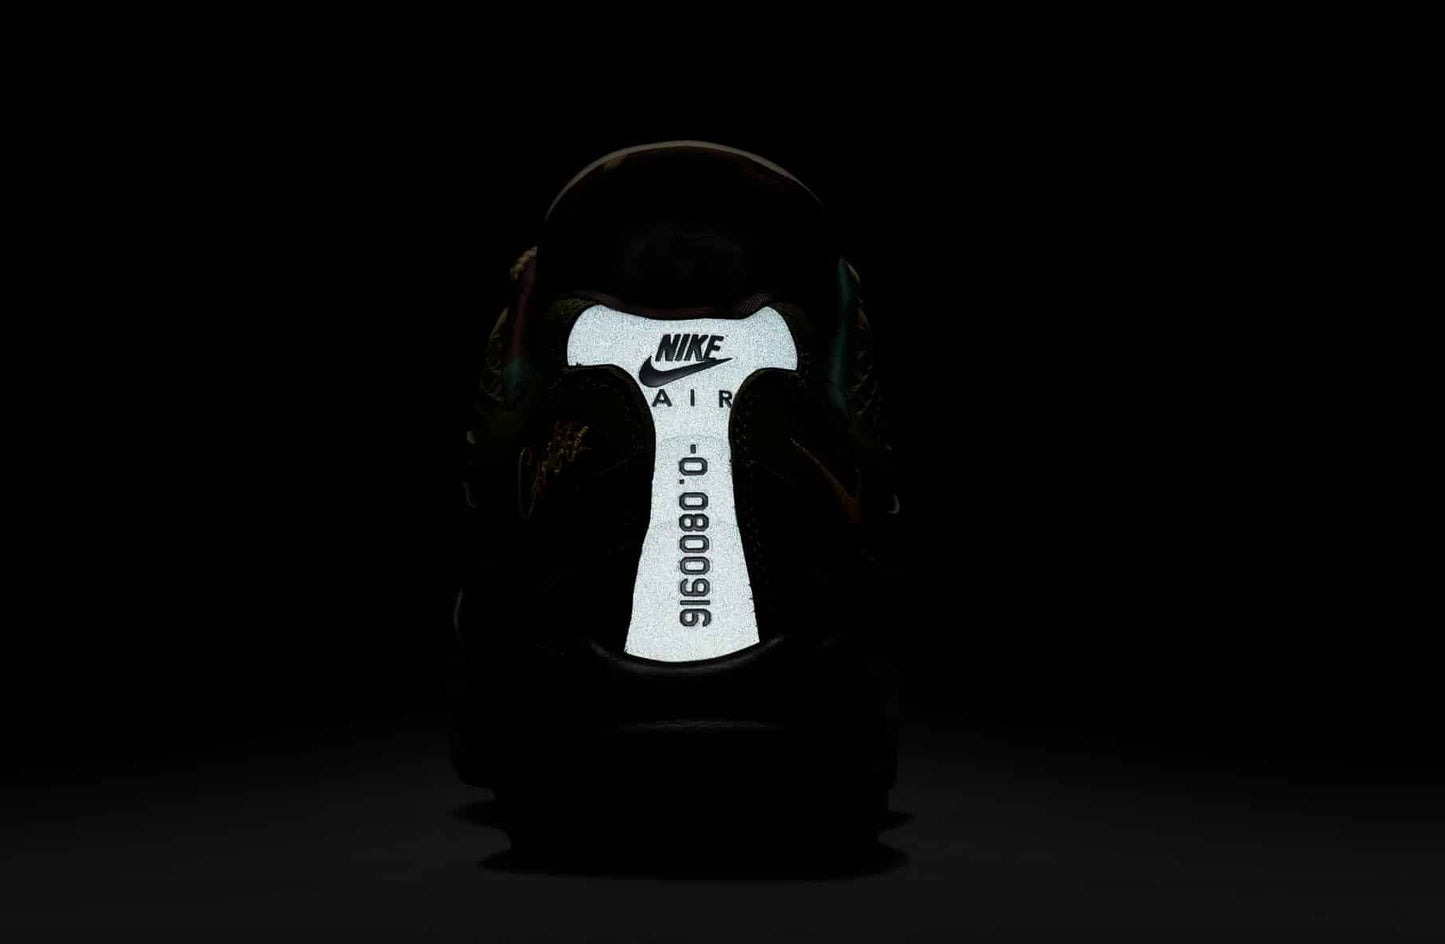 Corteiz x Nike Air Max 95 “Rules The World - Sequoia”